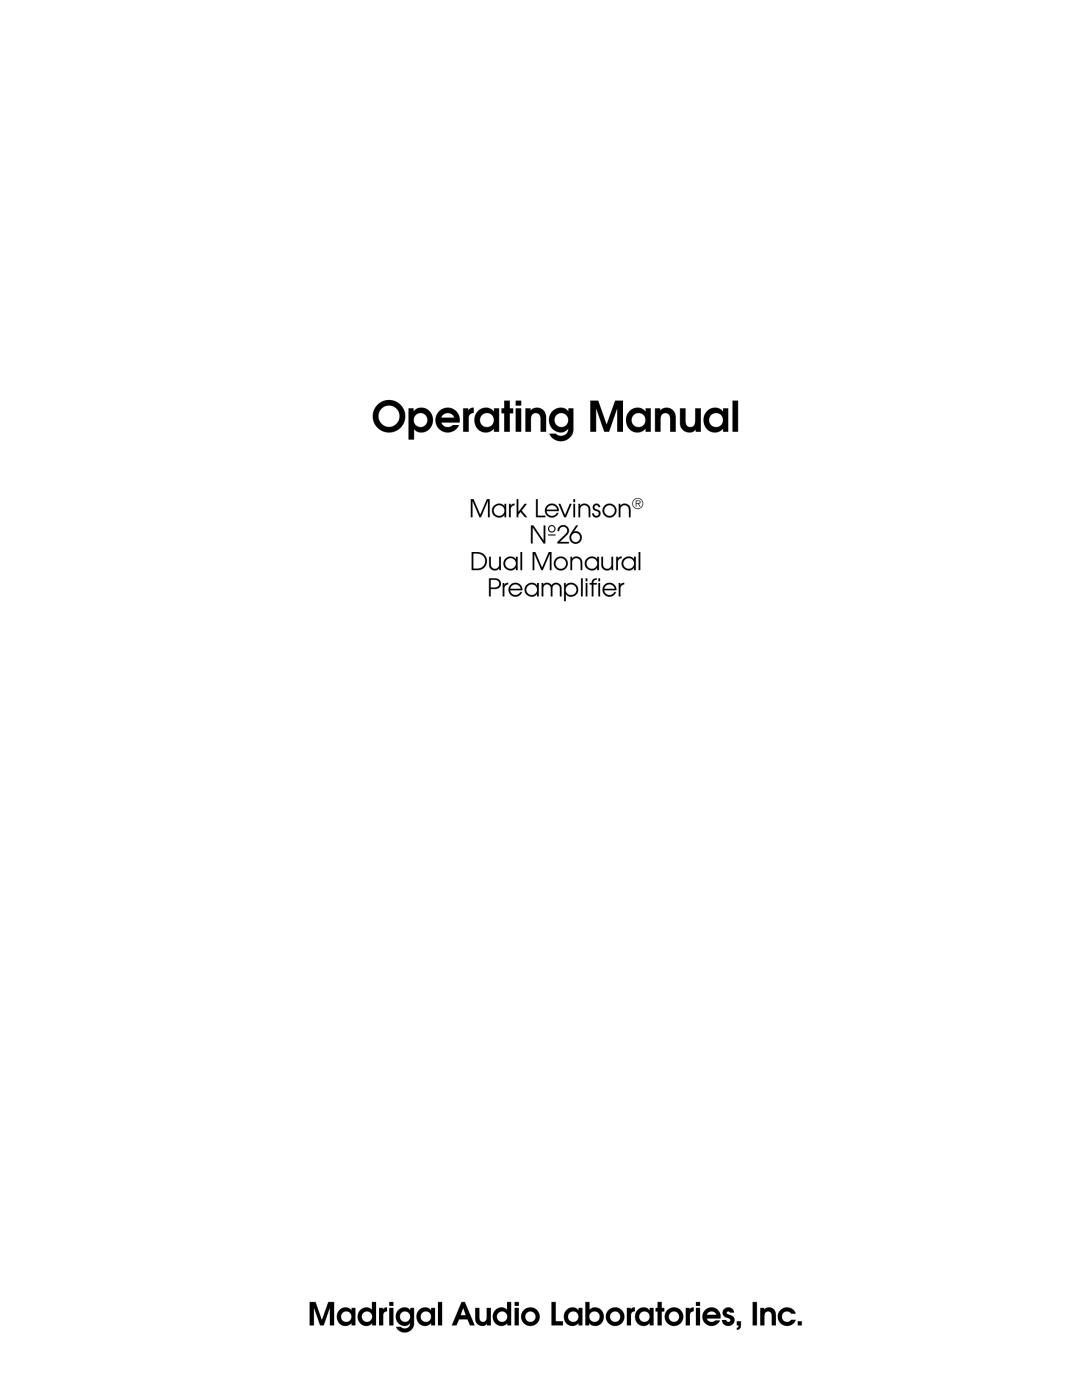 Mark Levinson N26 manual Operating Manual, Madrigal Audio Laboratories, Inc, Mark Levinson Nº26 Dual Monaural Preamplifier 